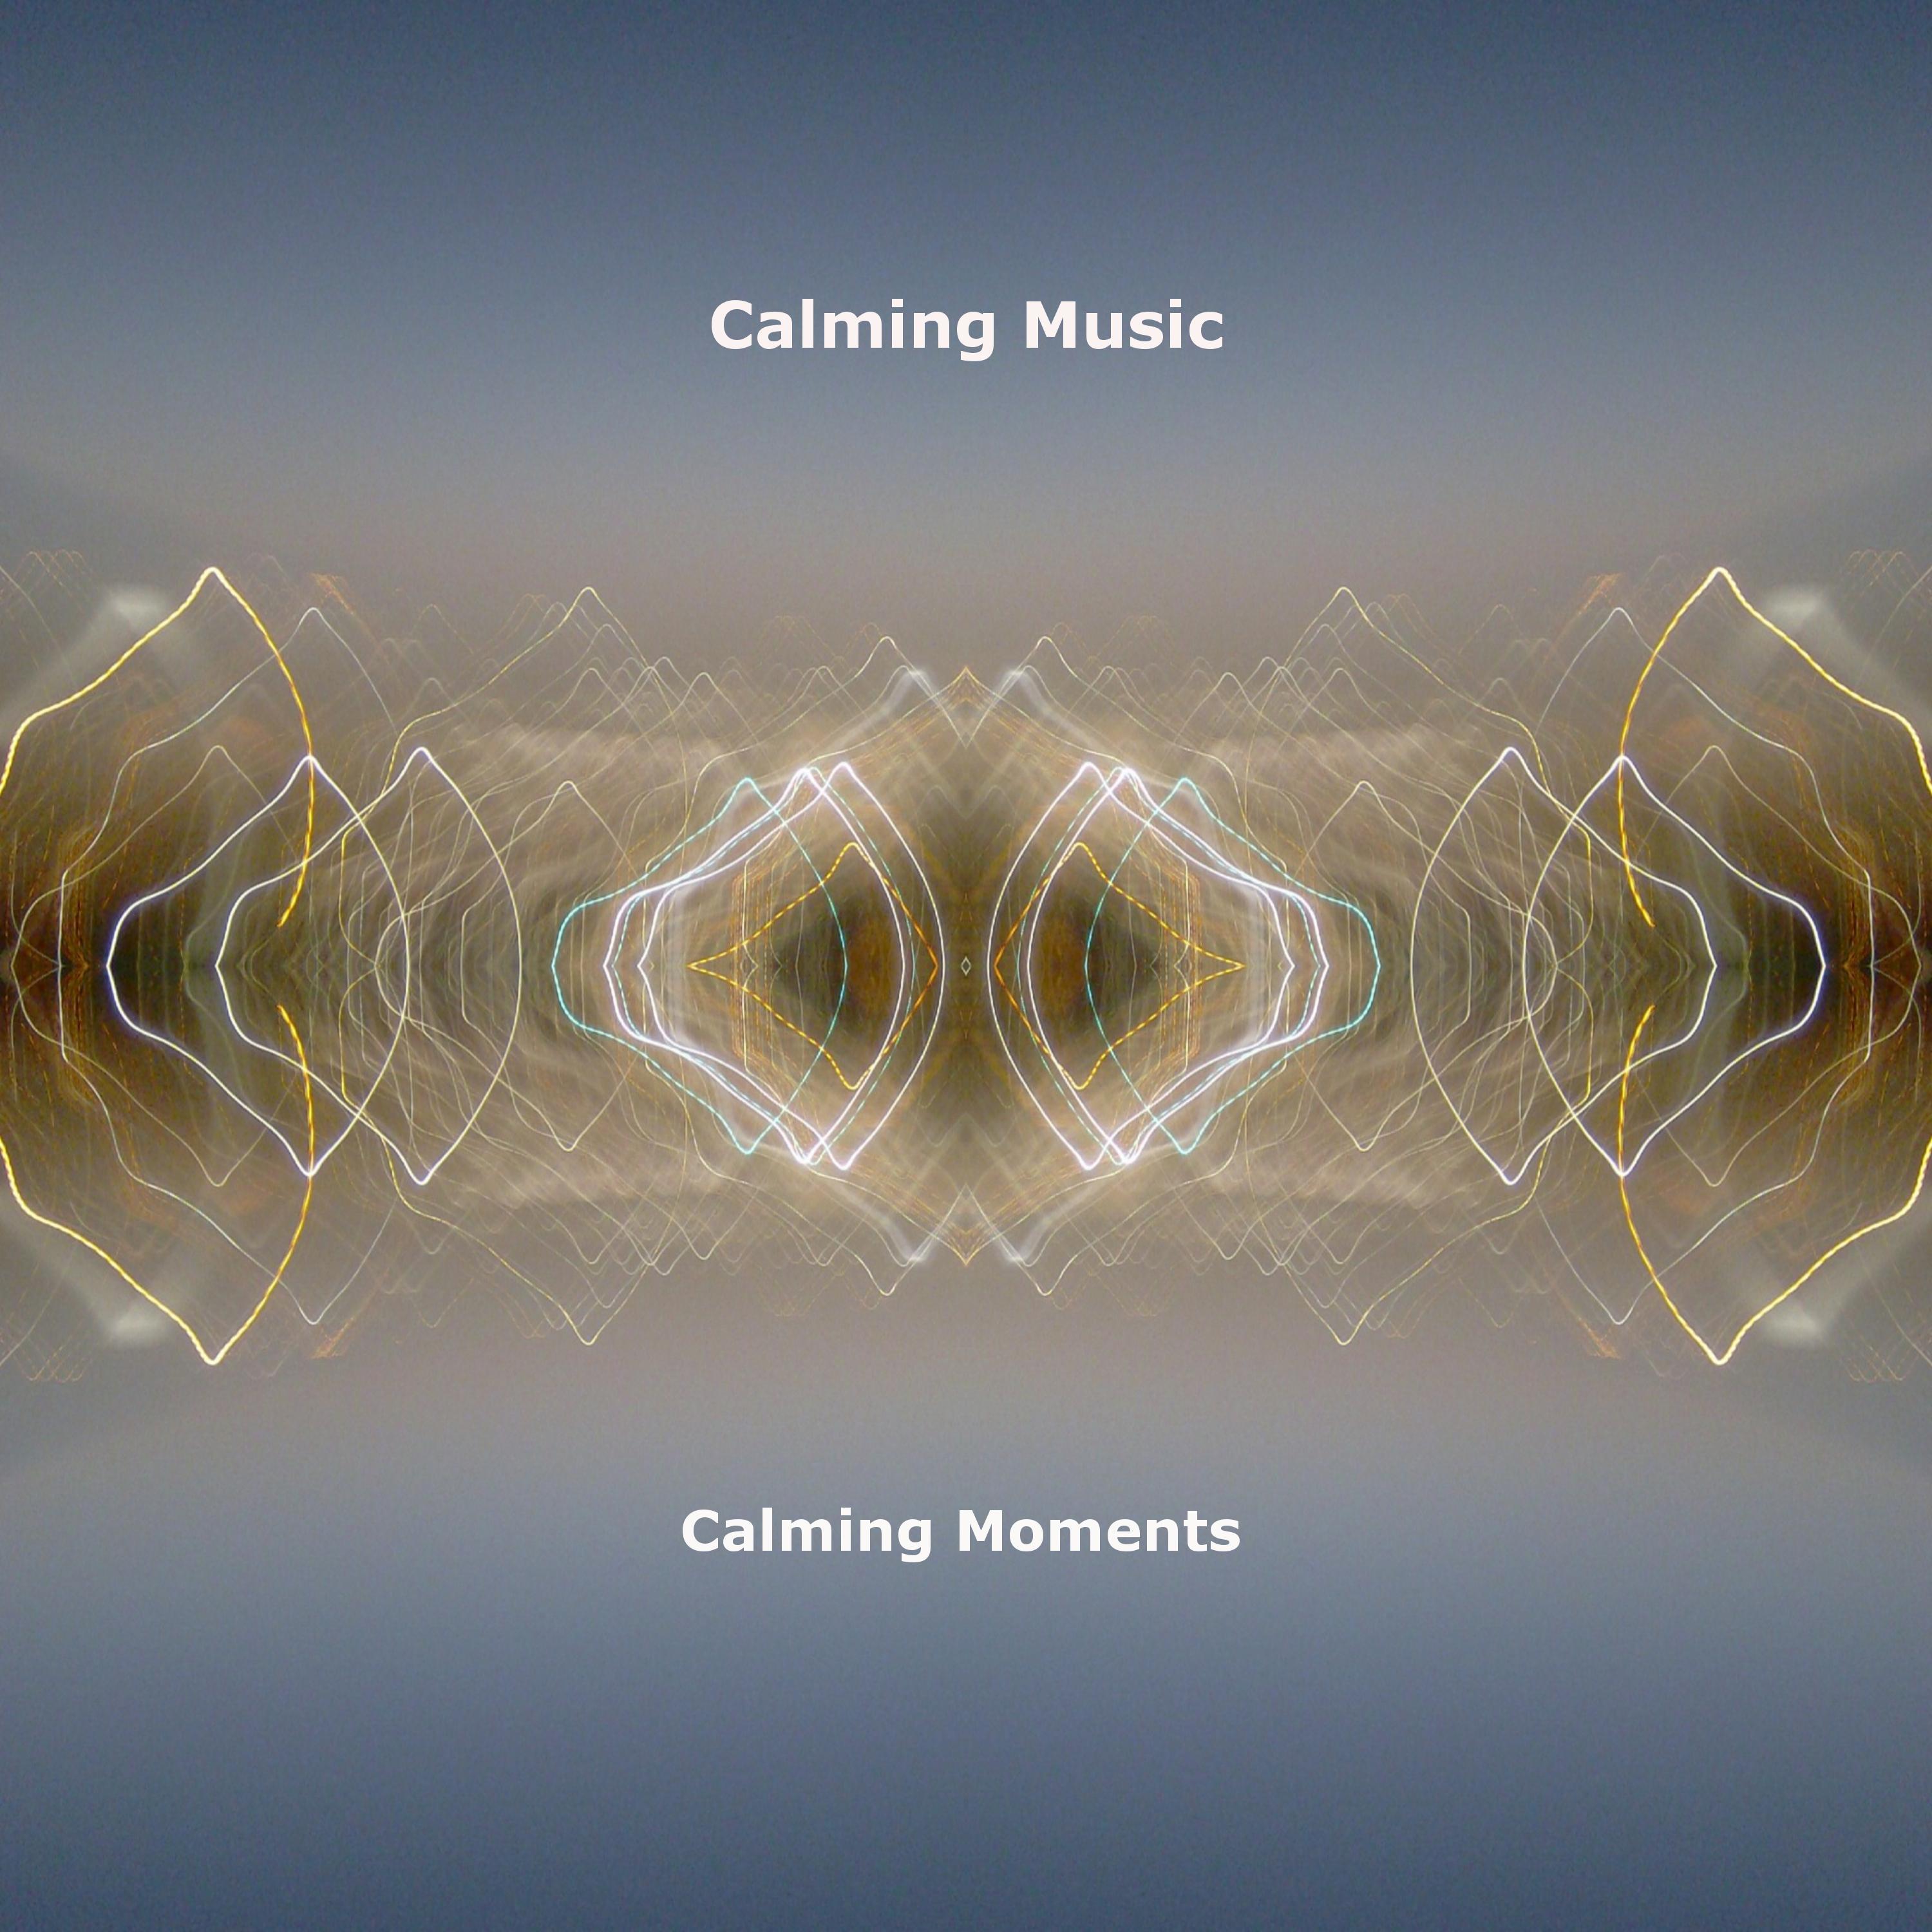 Calmness Within